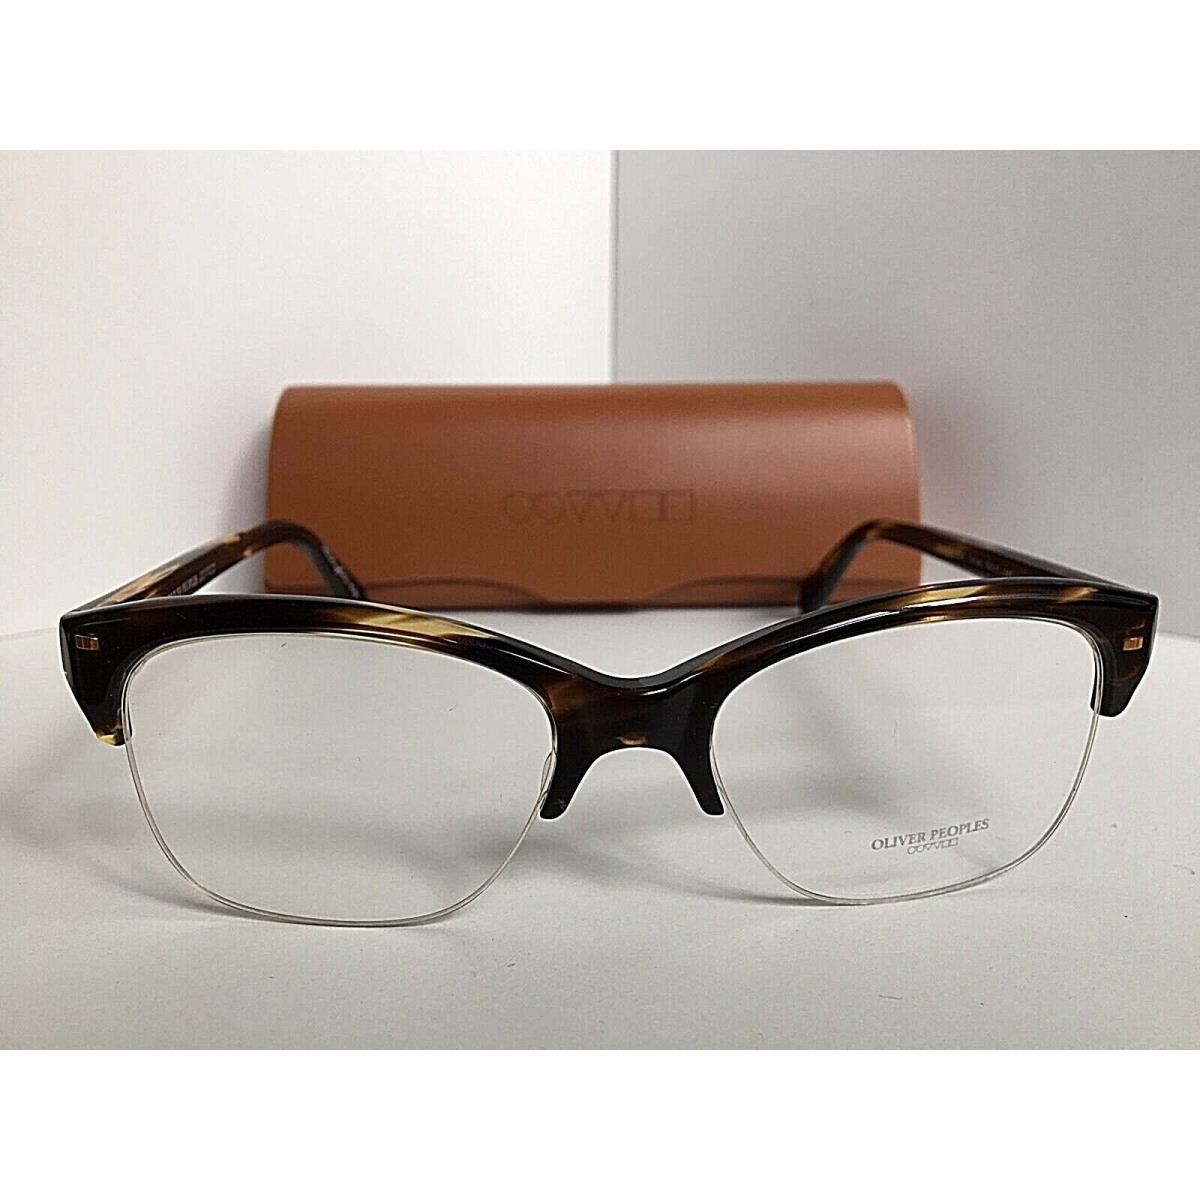 Oliver Peoples eyeglasses Tarlan - Tortoise Frame 0